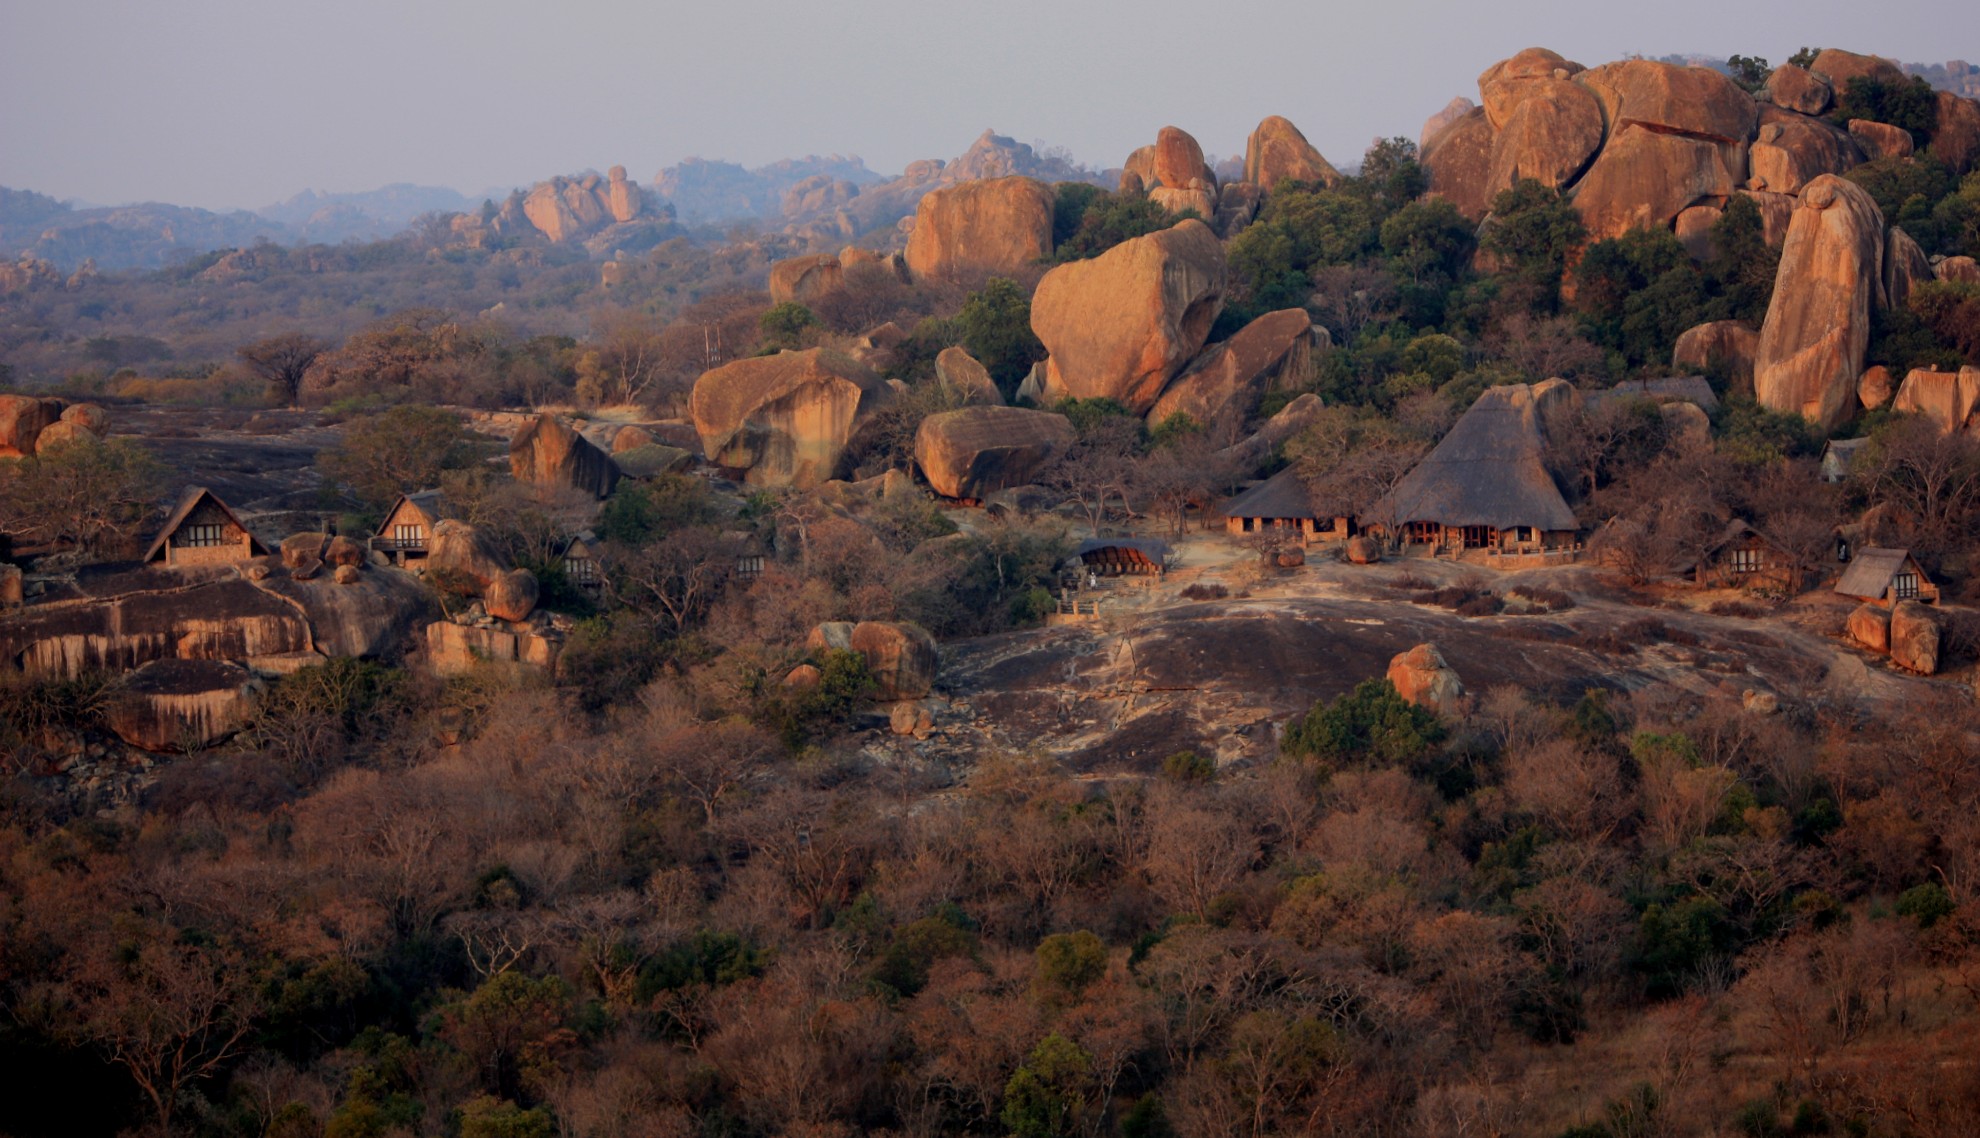 Big Cave Camp Matobo Hills Zimbabwe views from above